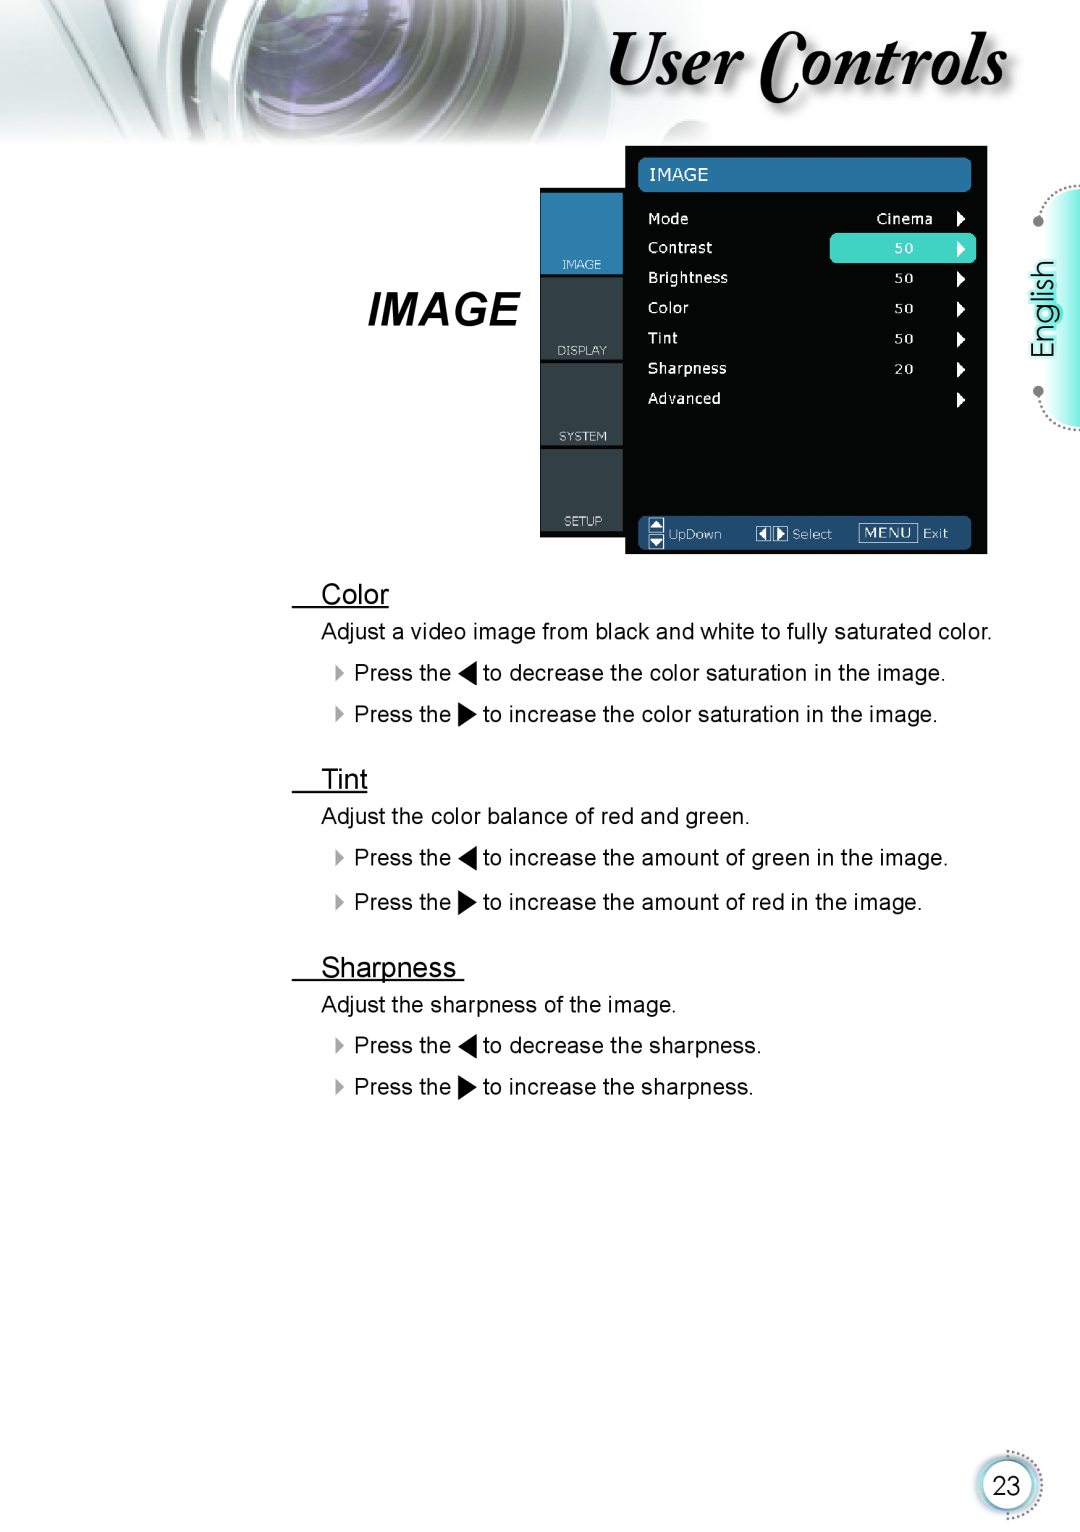 Optoma Technology HD20 manual Color, Tint, Sharpness, ser ontrols, Image, English 